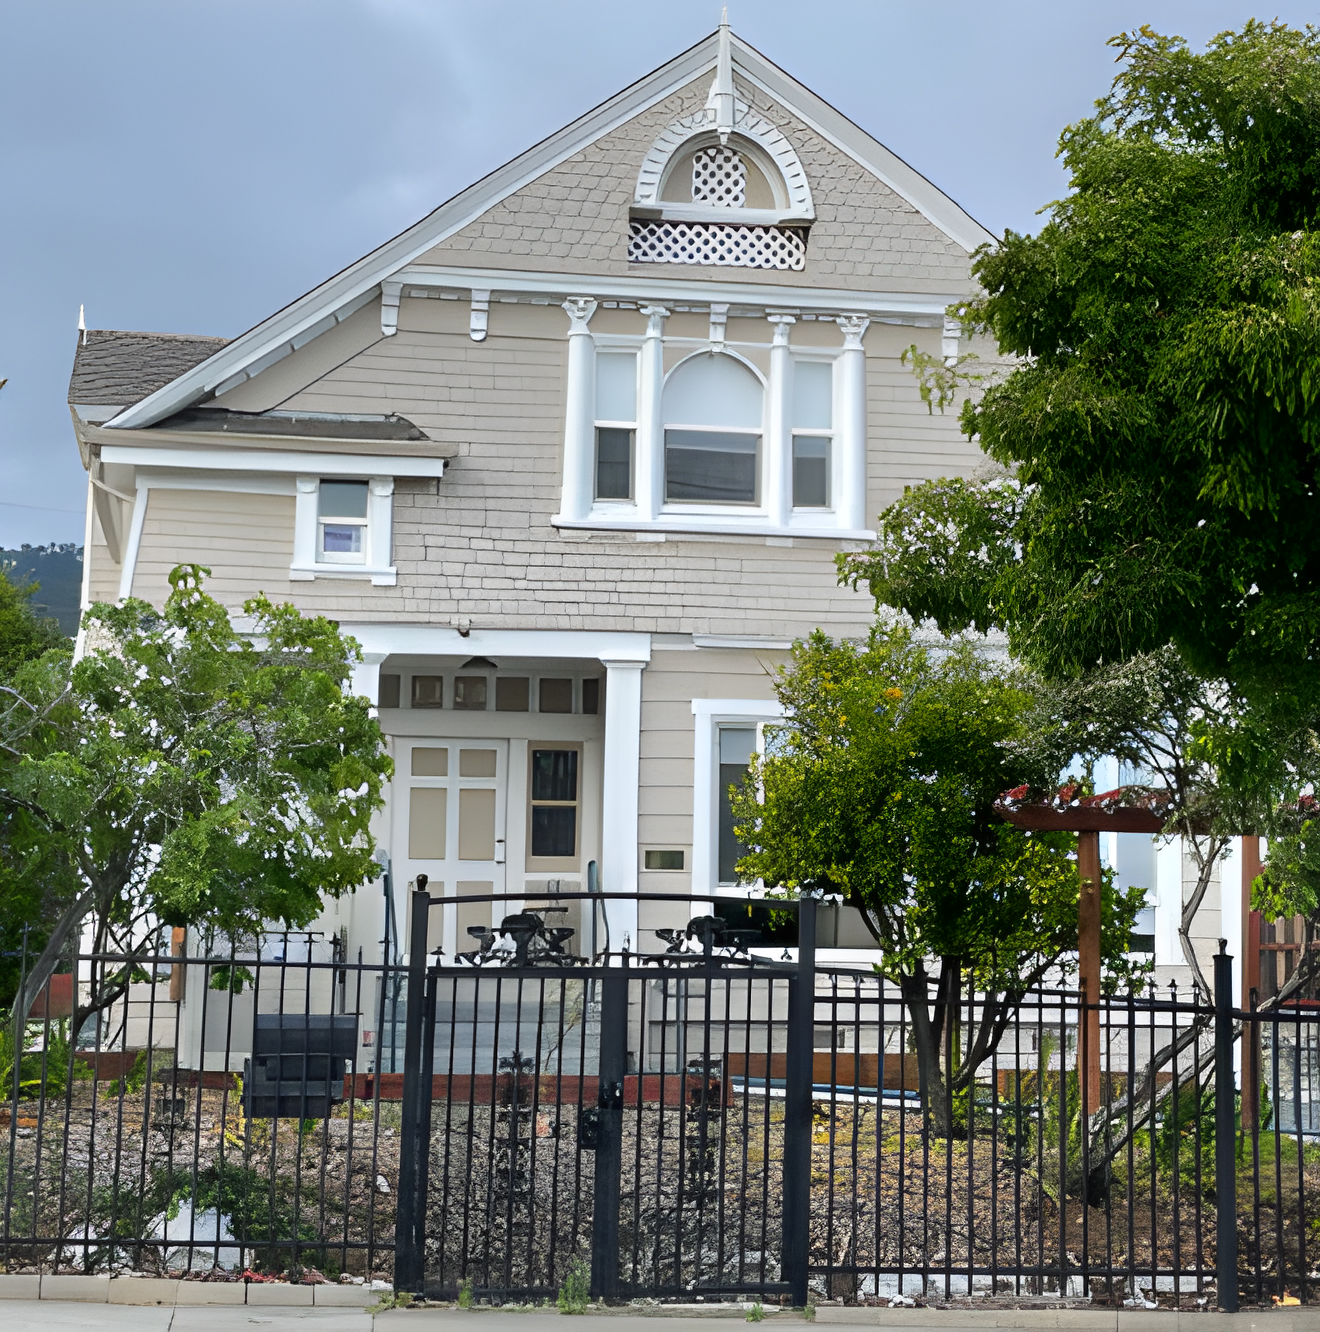 Oakland Heritage Property 83: 3220 MacArthur Blvd (Image A) Image